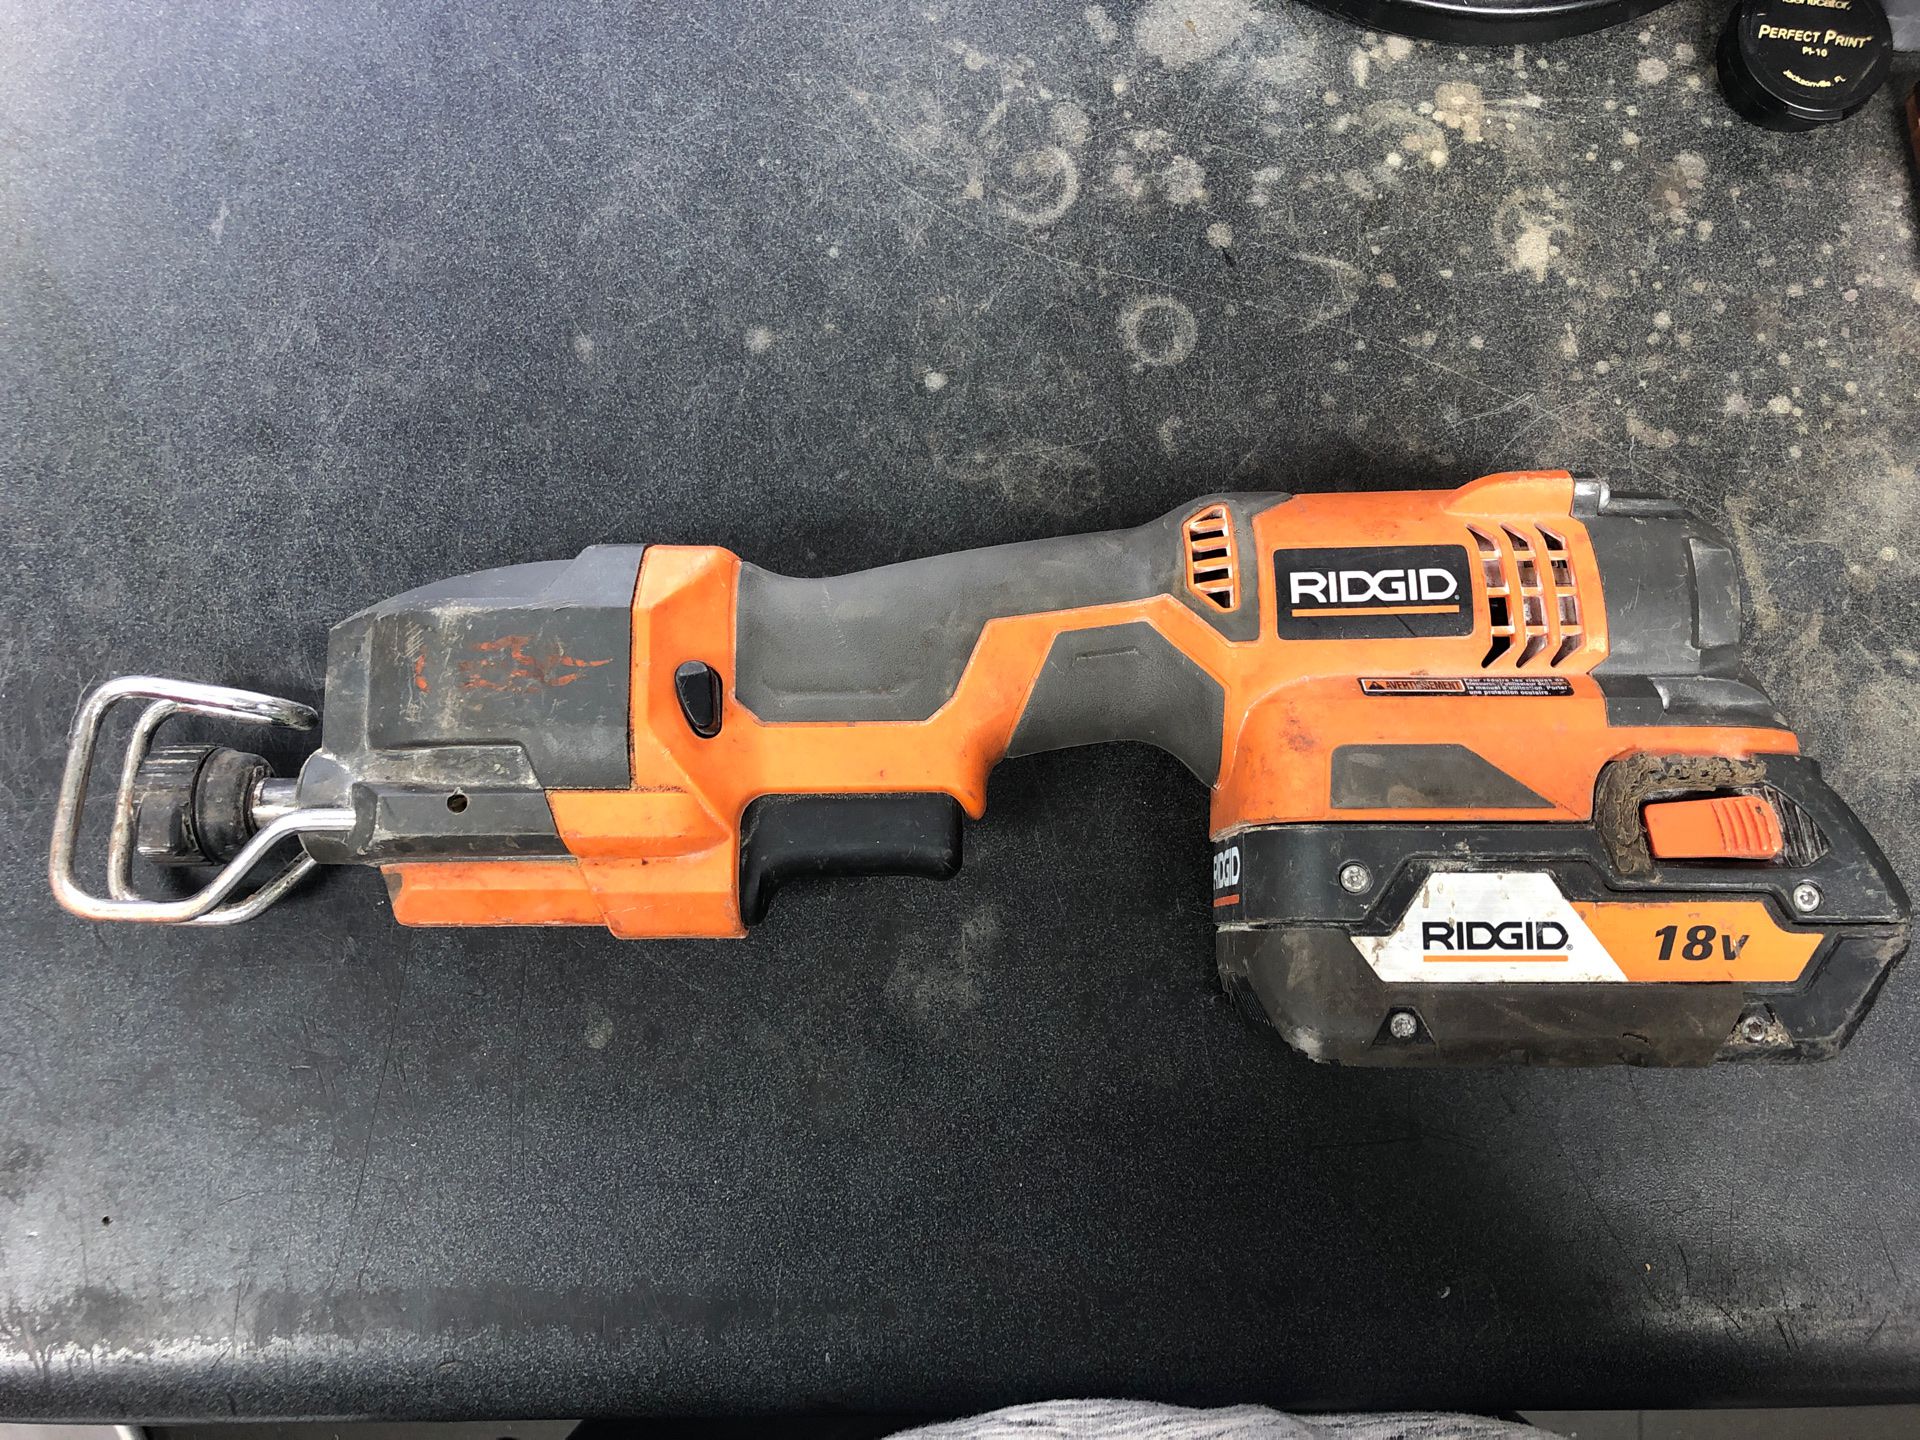 Ridgid R86447 Orange Reciprocating saw with battery works 100%